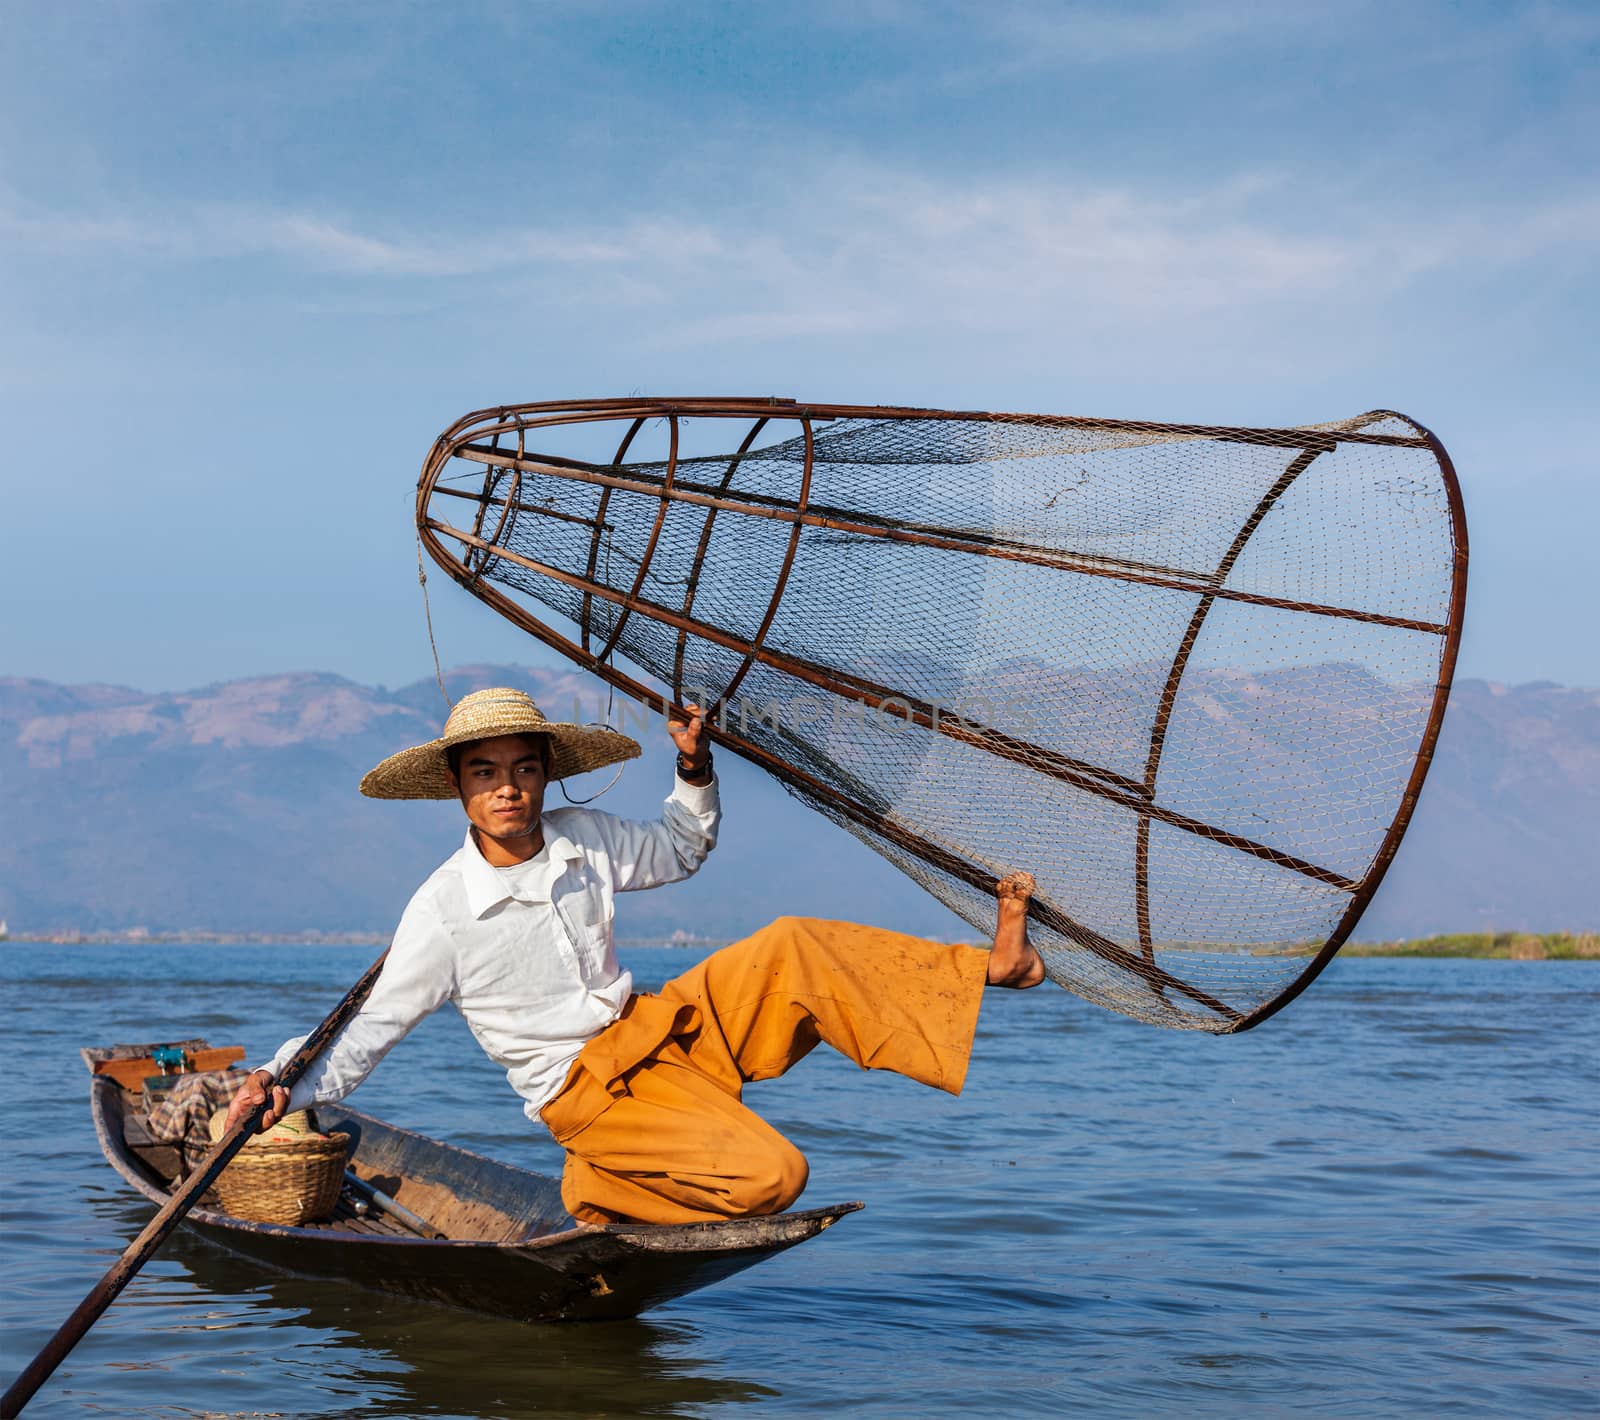 Burmese fisherman at Inle lake, Myanmar by dimol